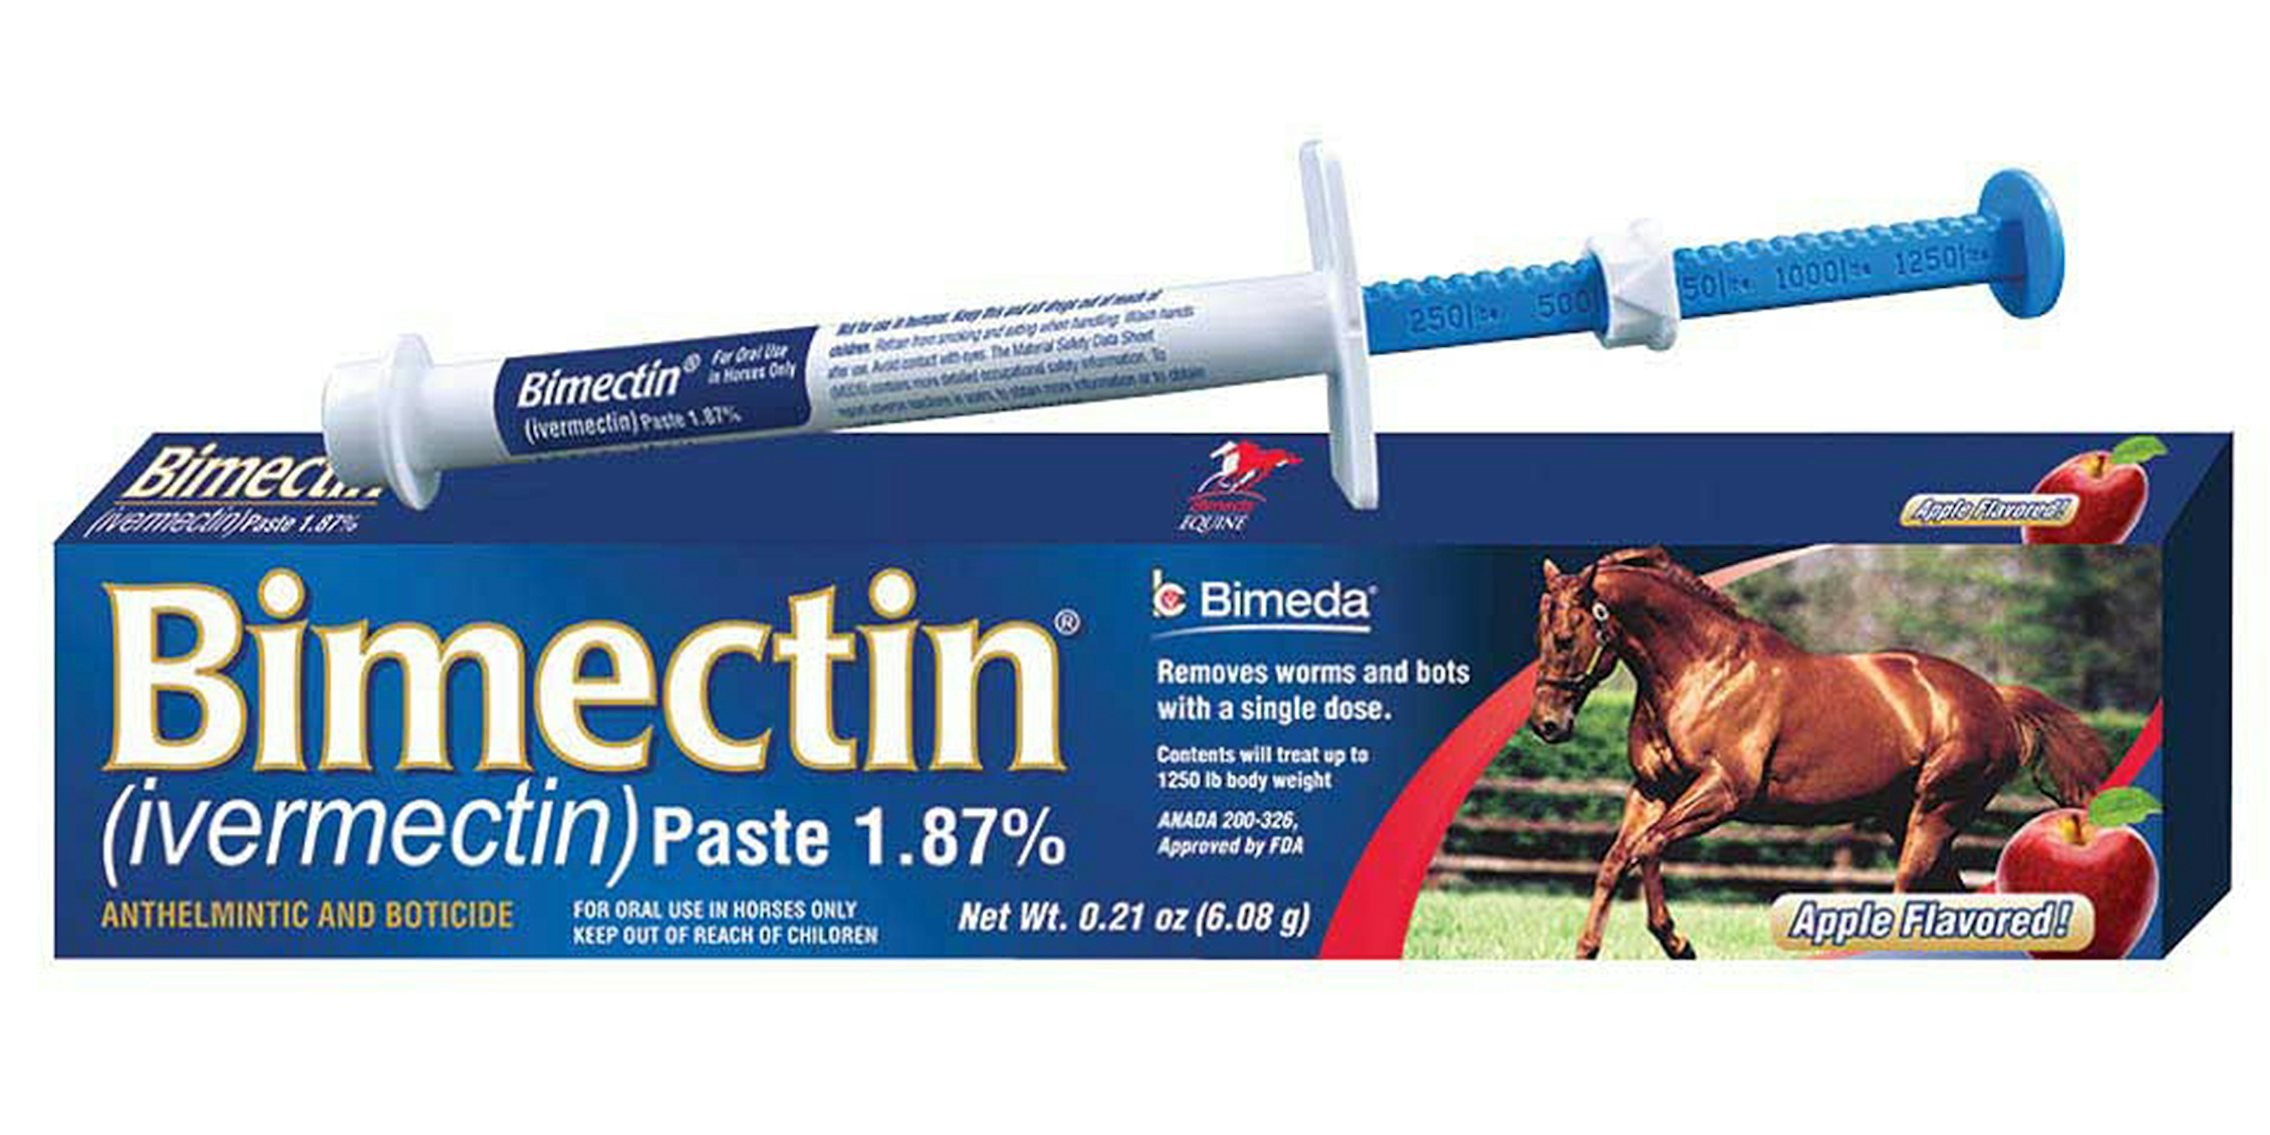 Bimectin (ivermectin) apple-flavored horse paste with syringe